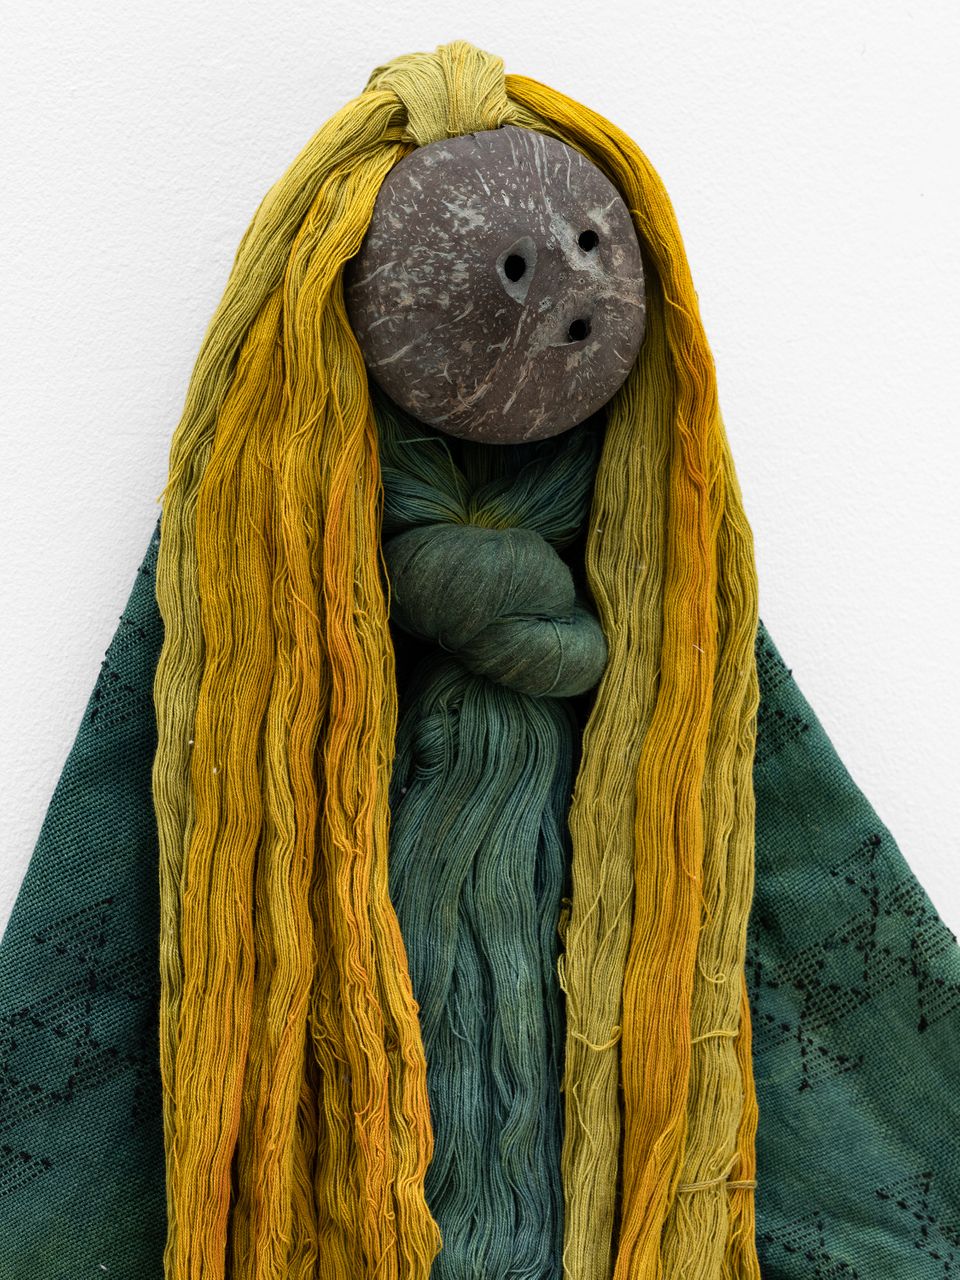 Triángulo/Rax, 2019 | Coconut, textile, thread dyed with Indigofera and yellow dye 24 x 46 cm